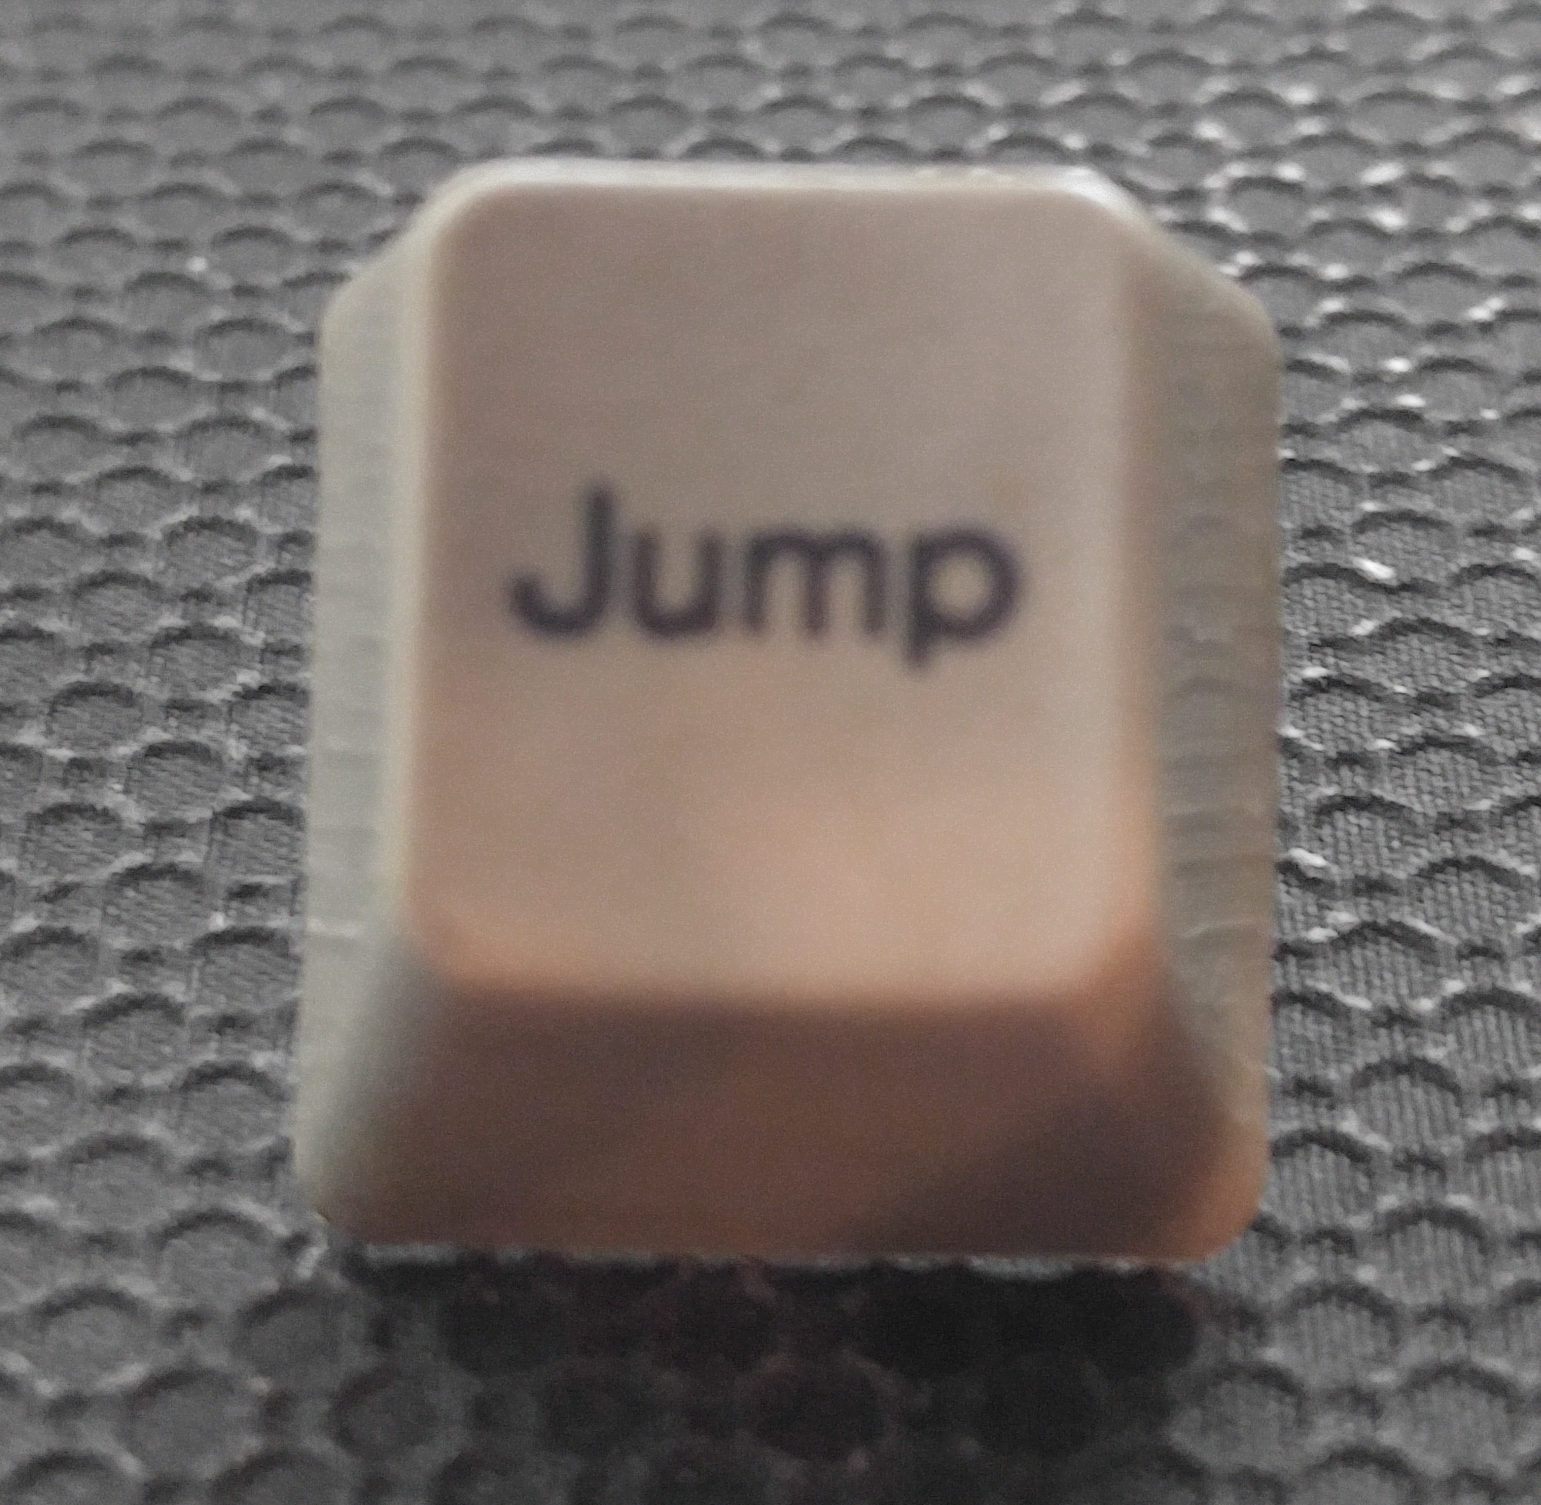 jump_key.png